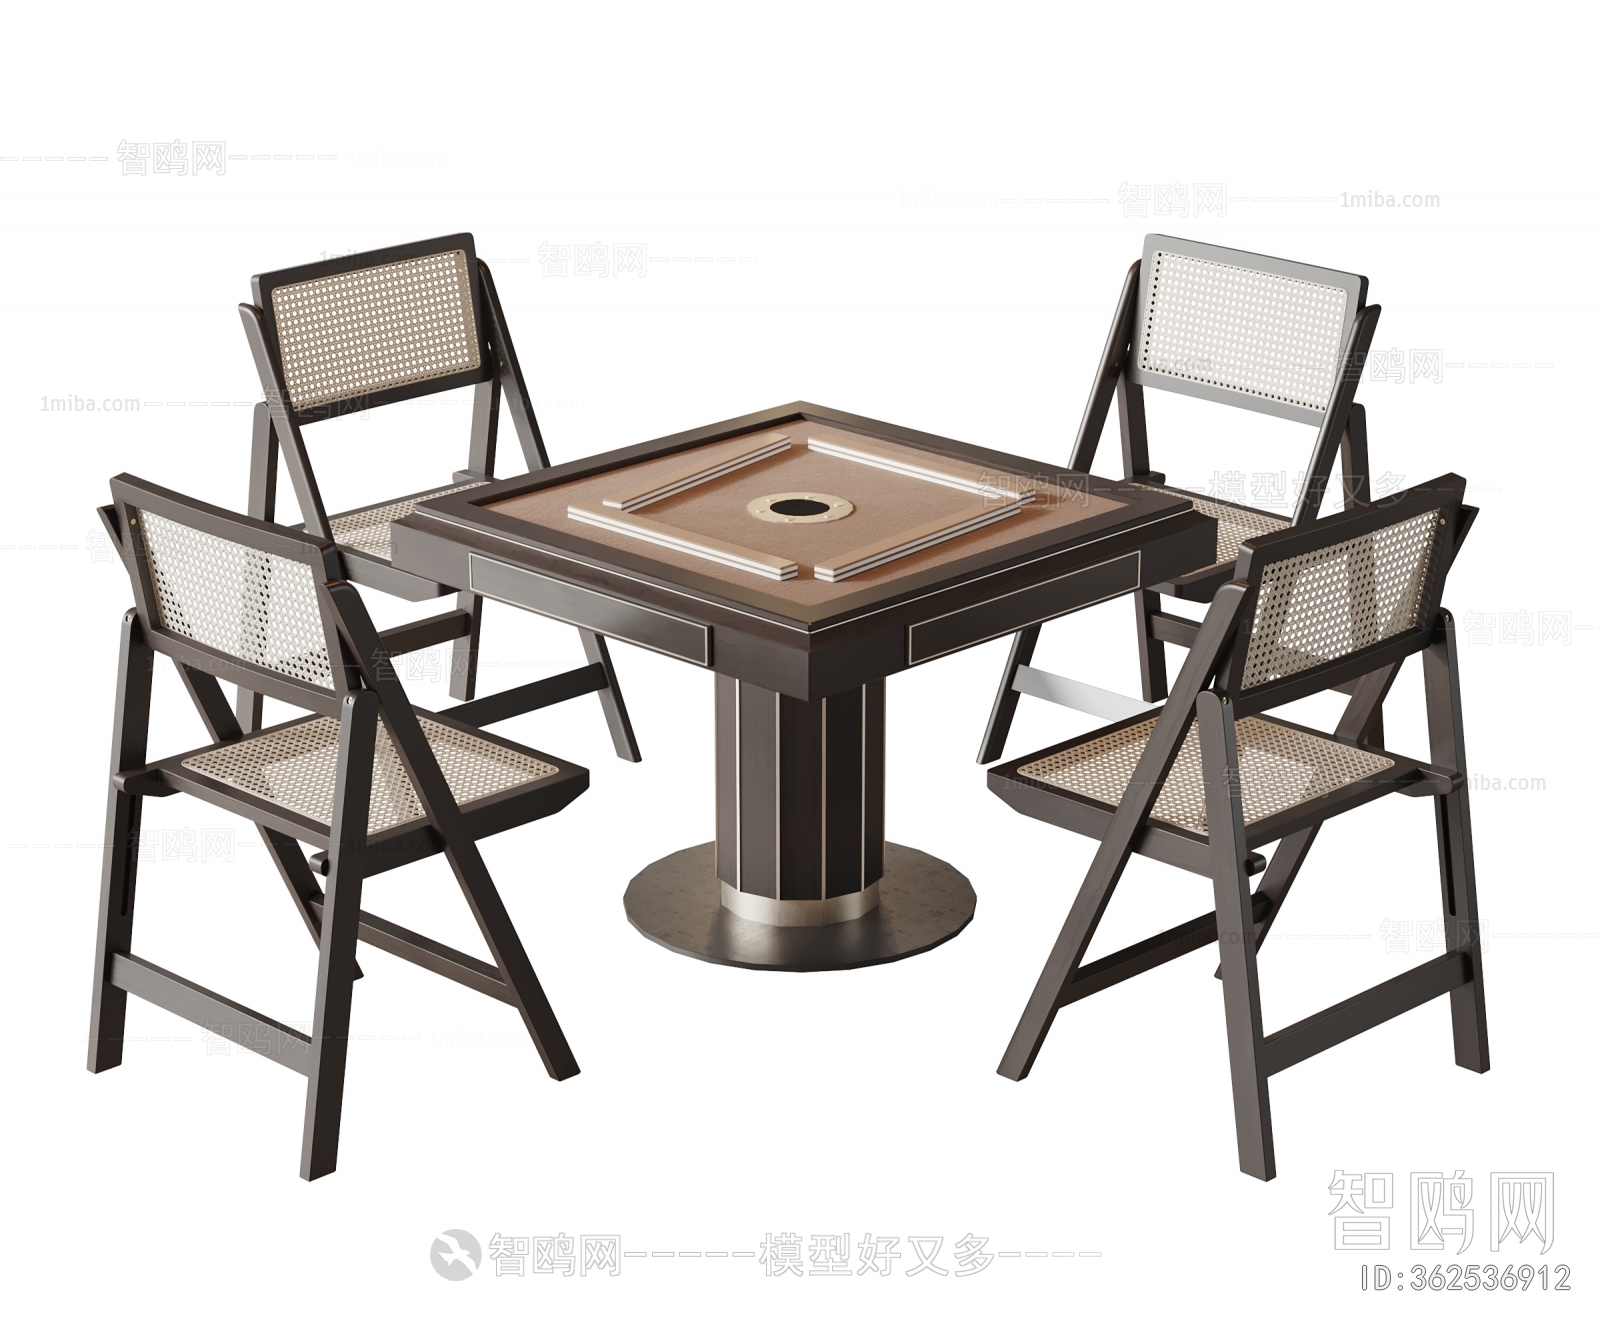 Wabi-sabi Style Other Table